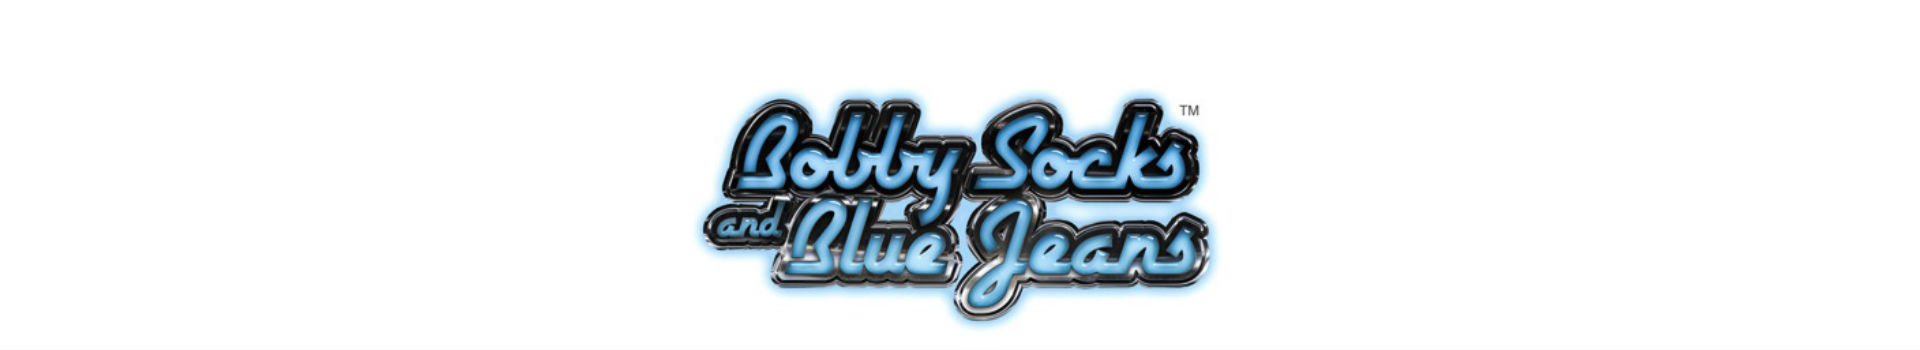 Bobby Socks and Blue Jeans banner image